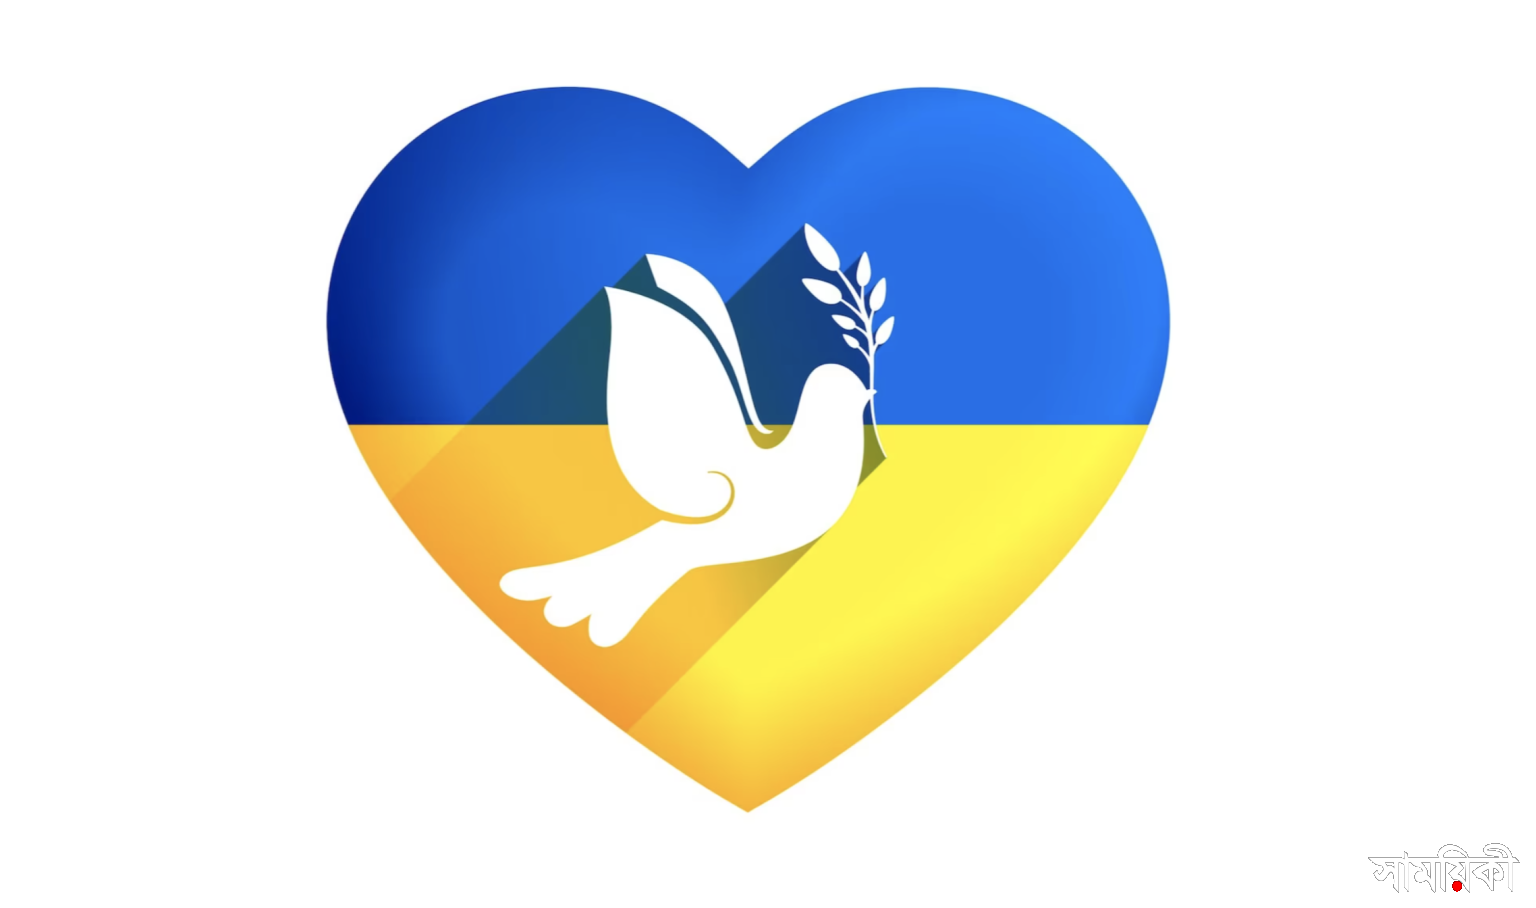 peace heart and dove bird with ukraine flag মধু চরণ চুমি, তেইশের কবিতা, দেবী বন্দনা এবং অন্যান্য কবিতা